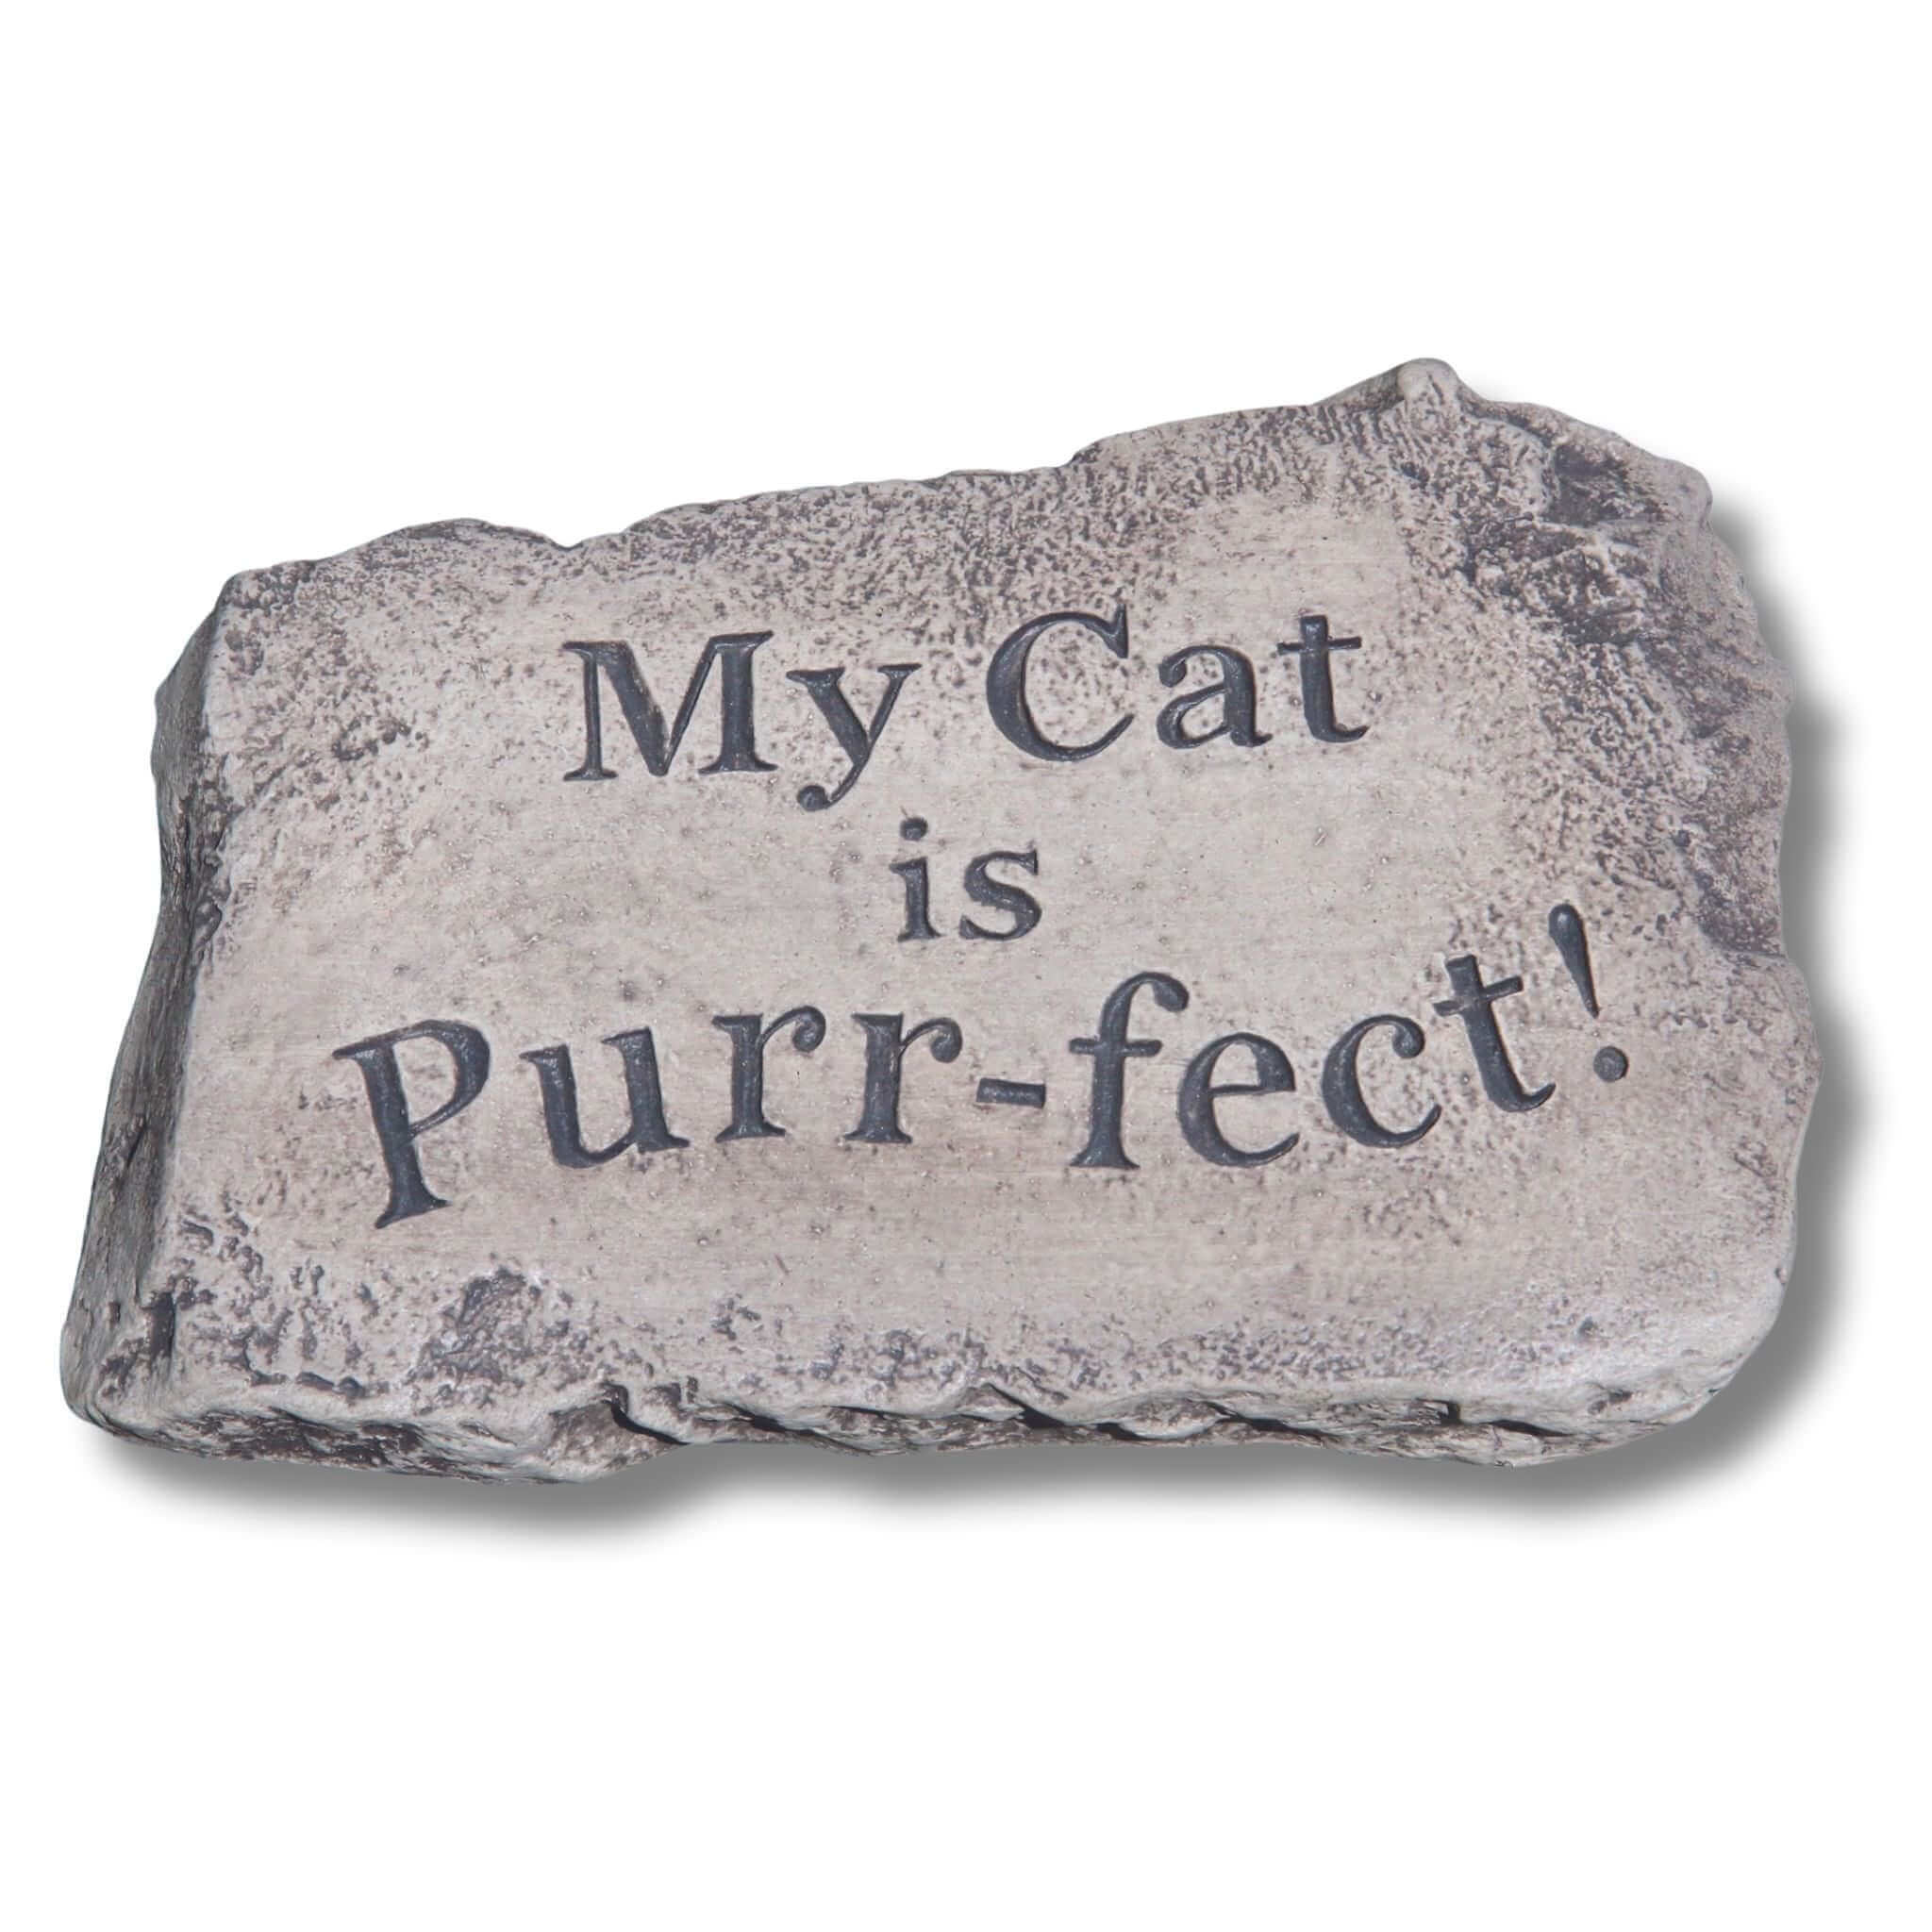 The Purrfect Cat Concrete Garden Greeting Stone - Massarellis #1840